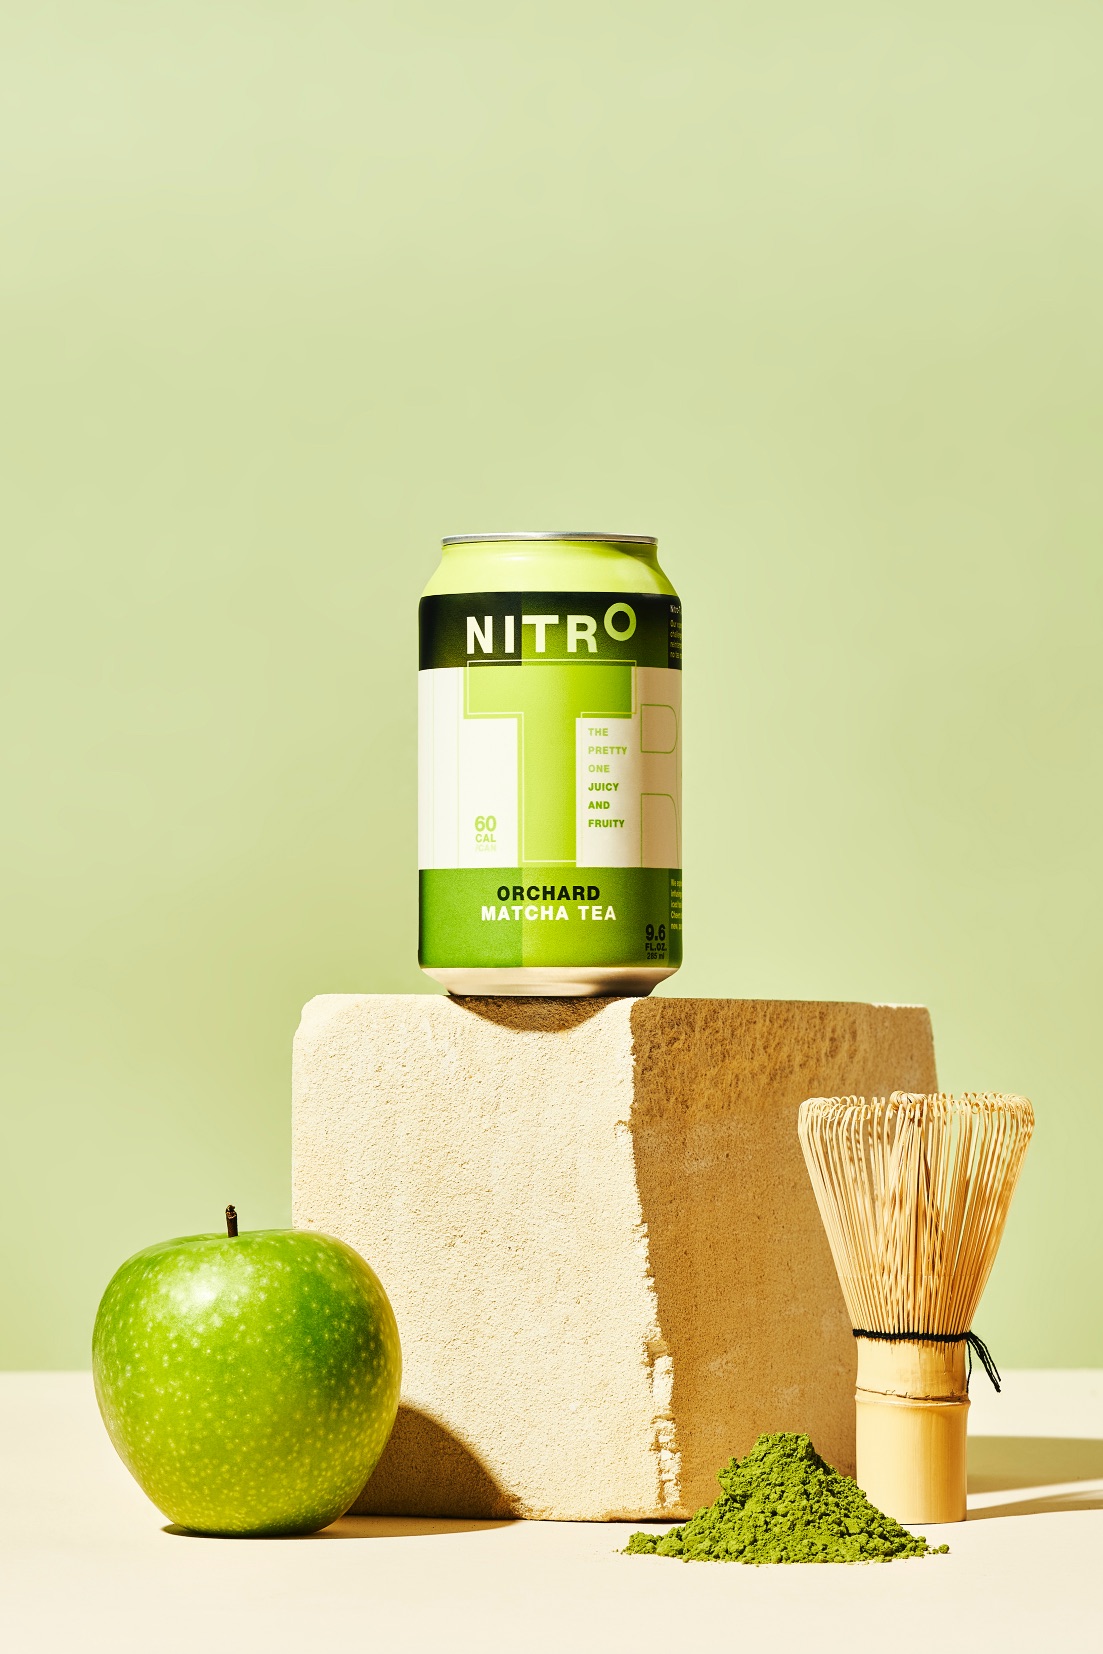 Nitro-T Packaging Design by Brandnew